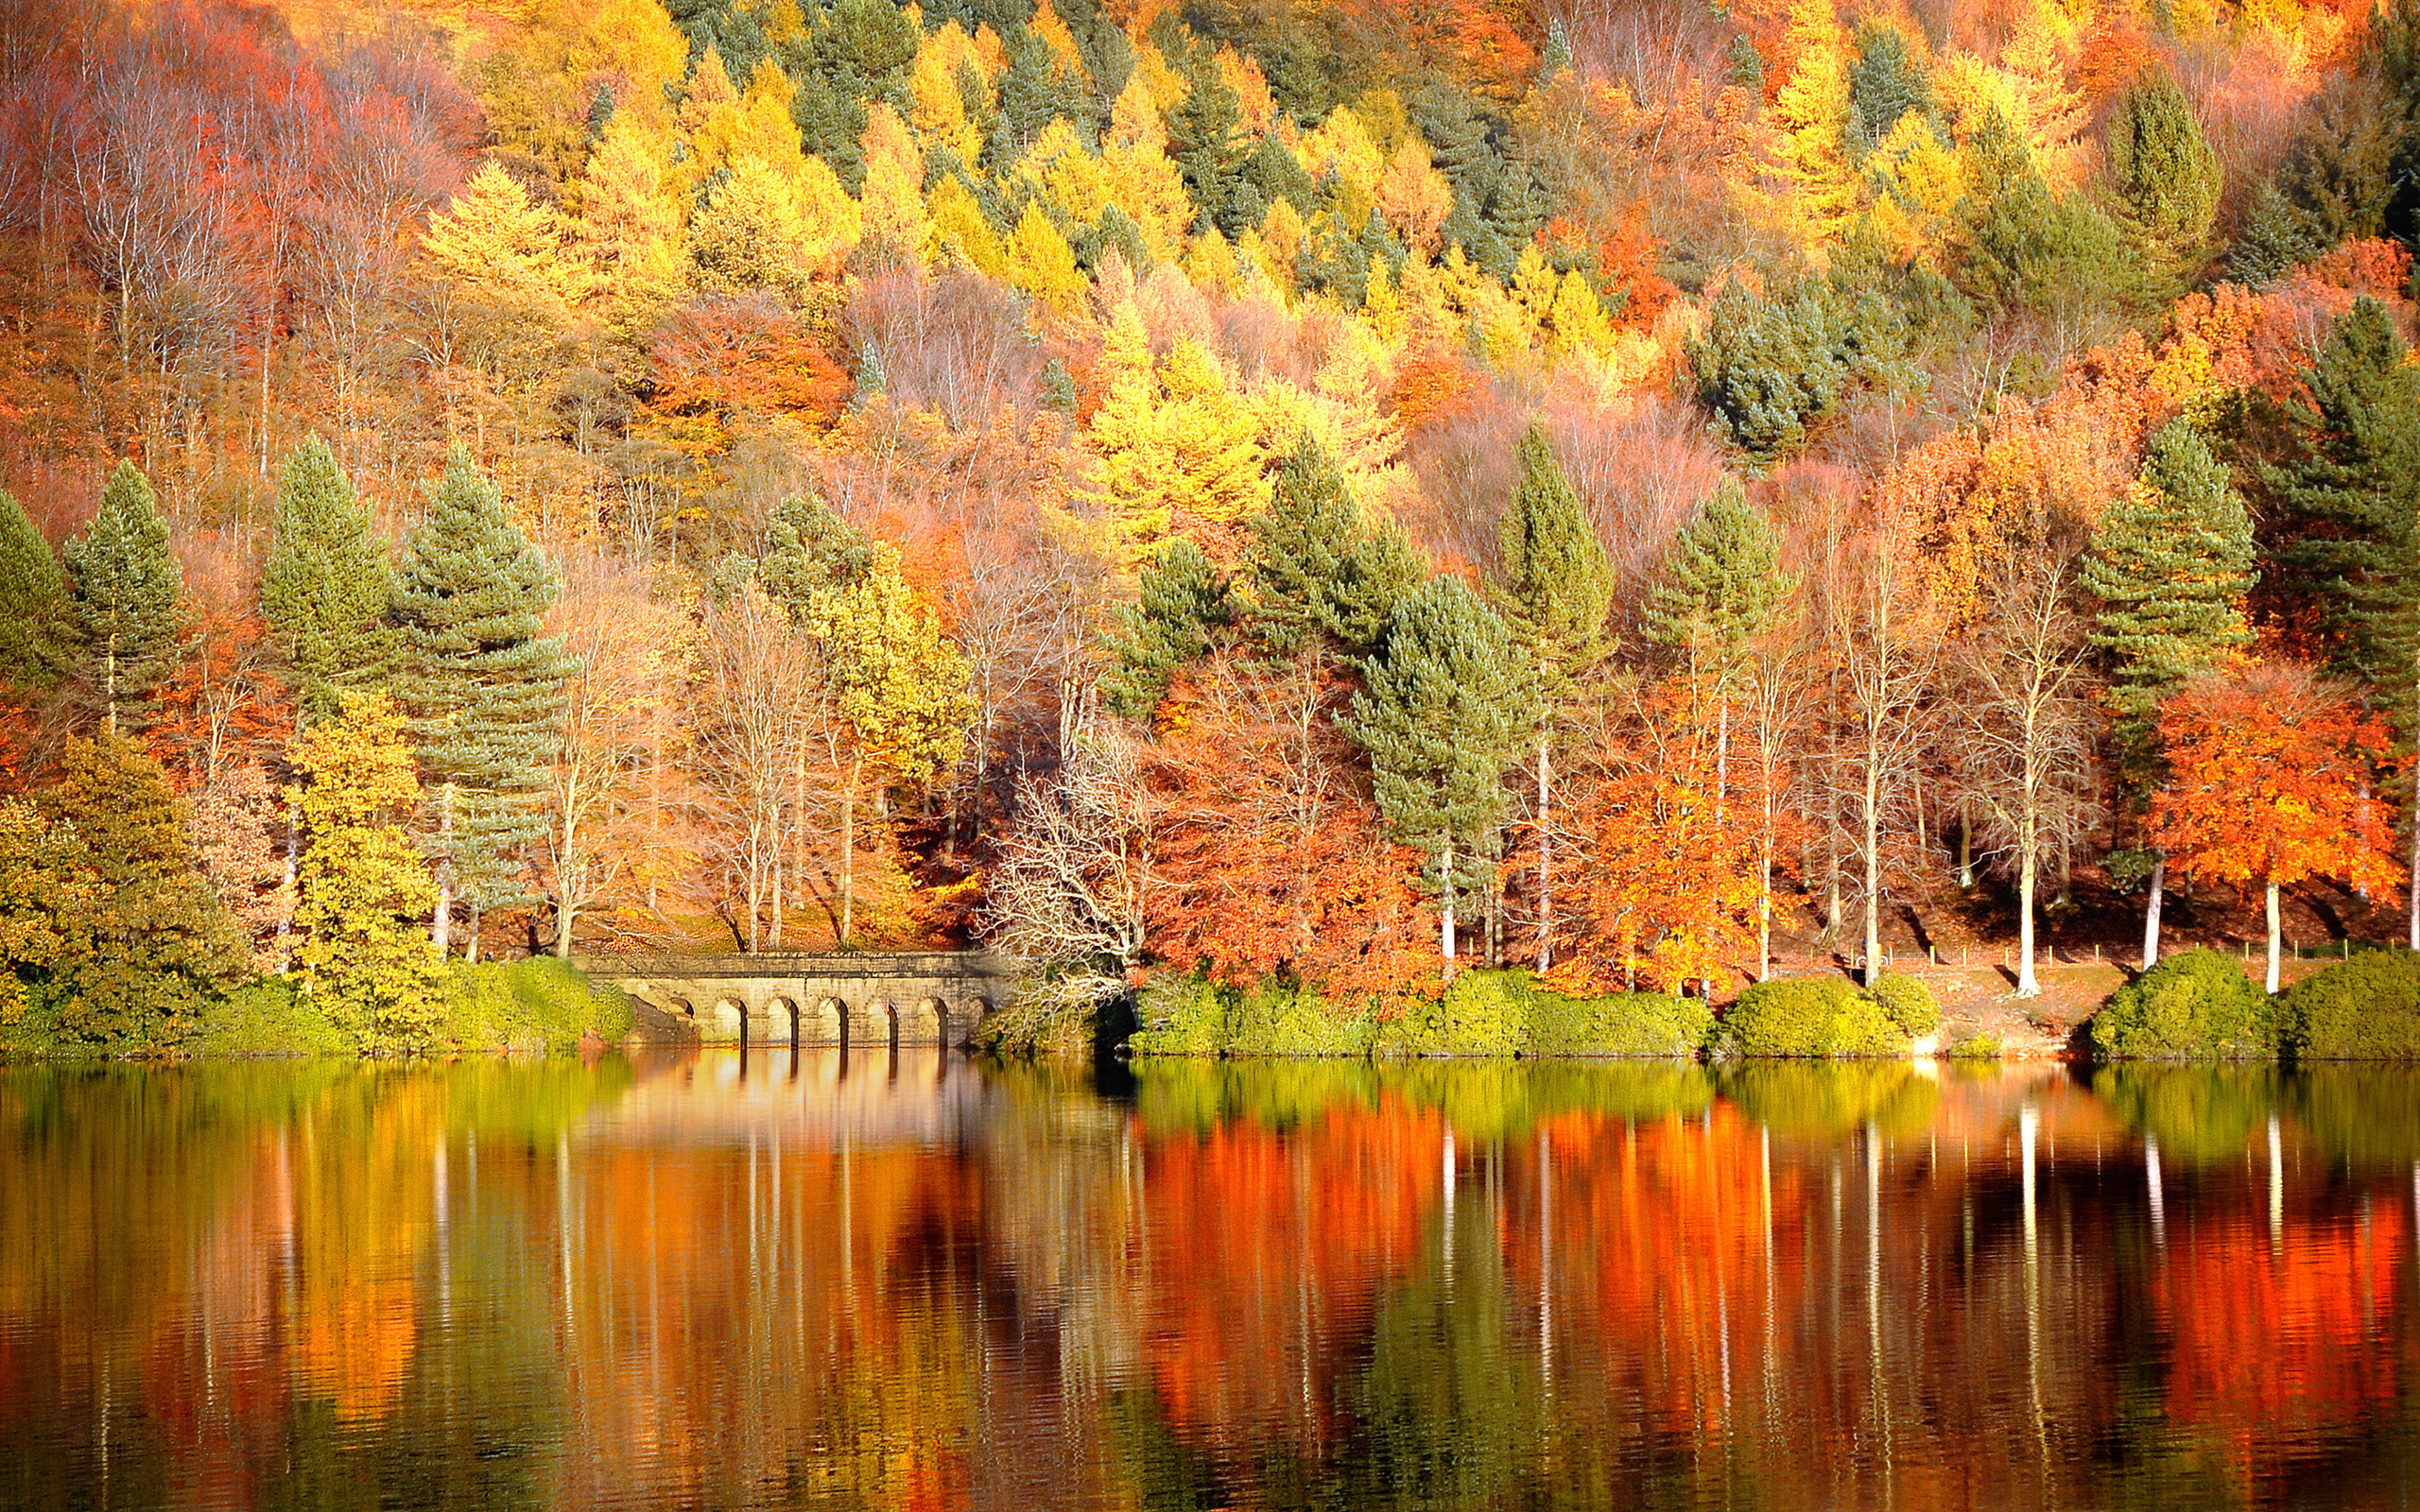 Autumn leaves in a serene natural landscape.